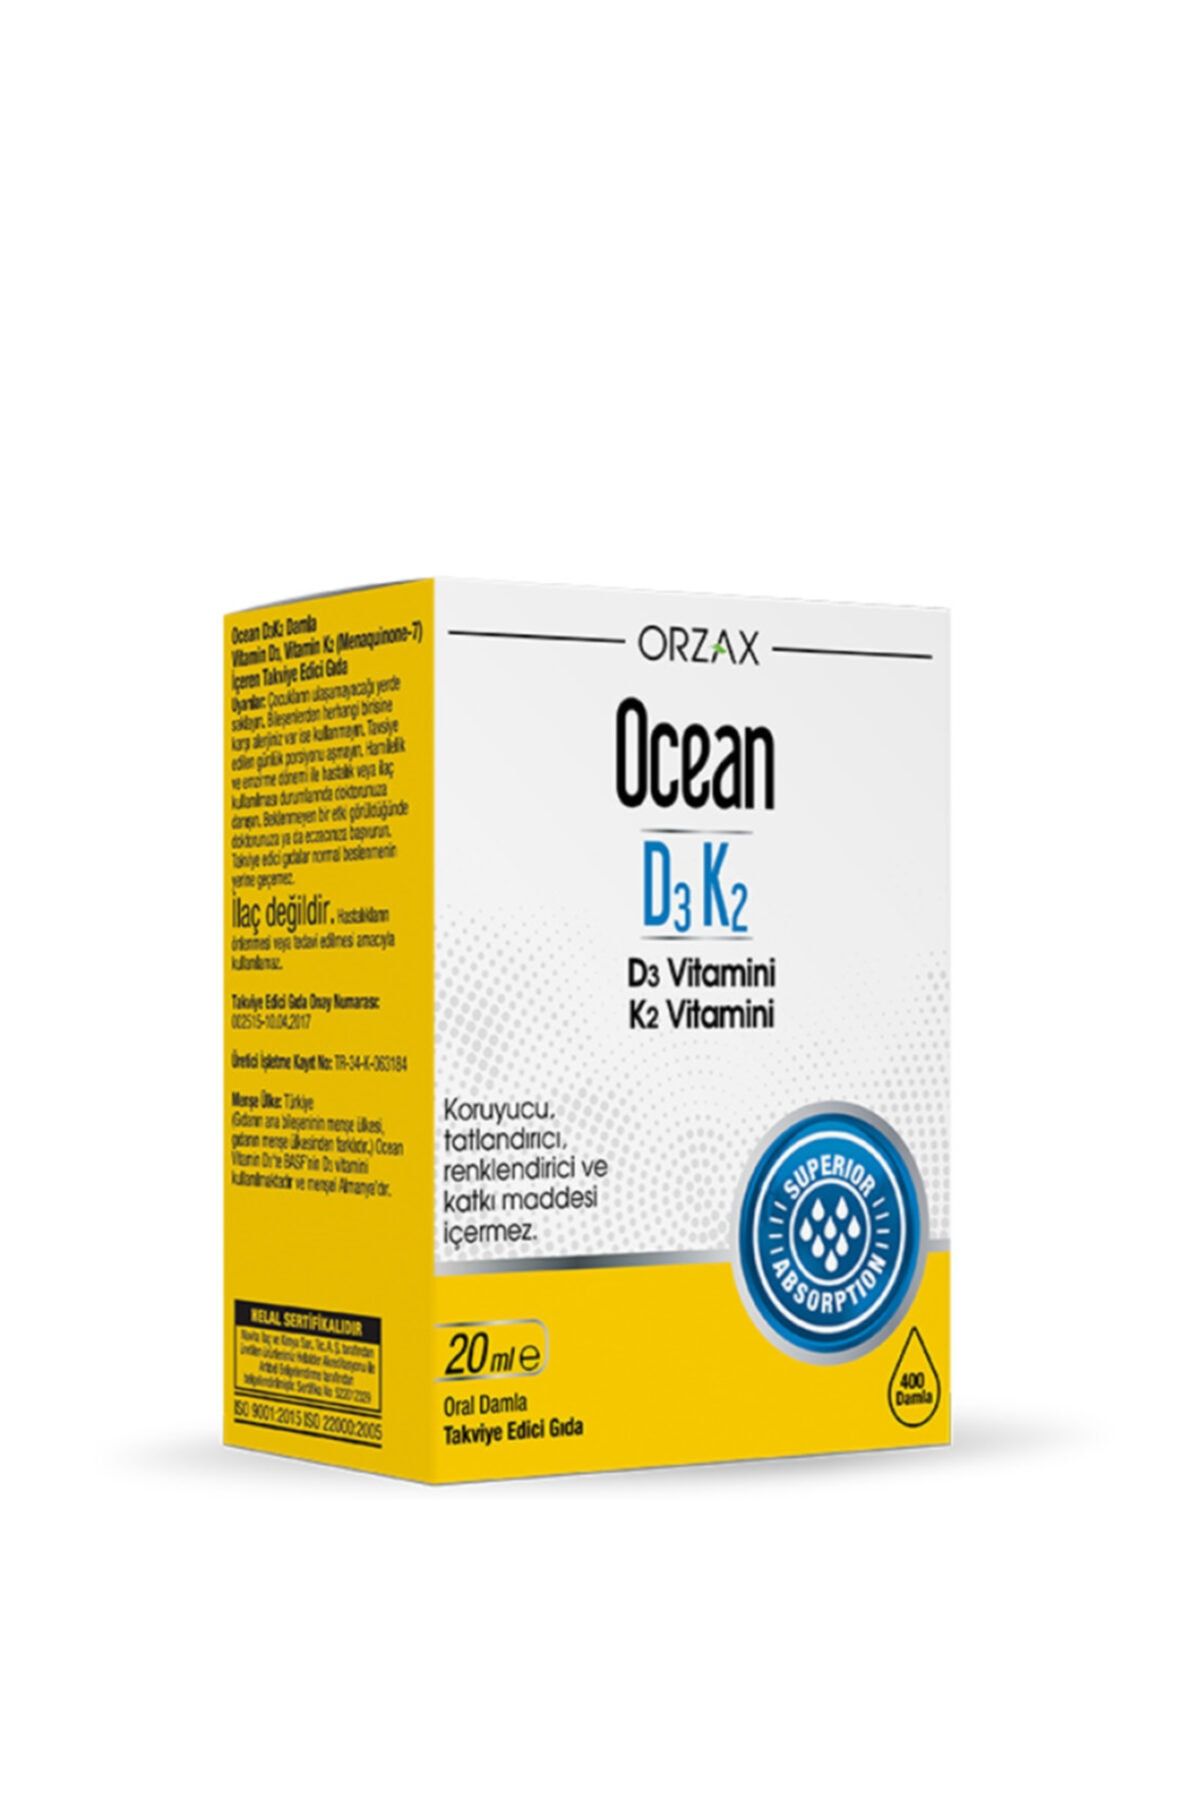 Ocean Orzax Ocean D3K2 Vitamin Damla 20 ml